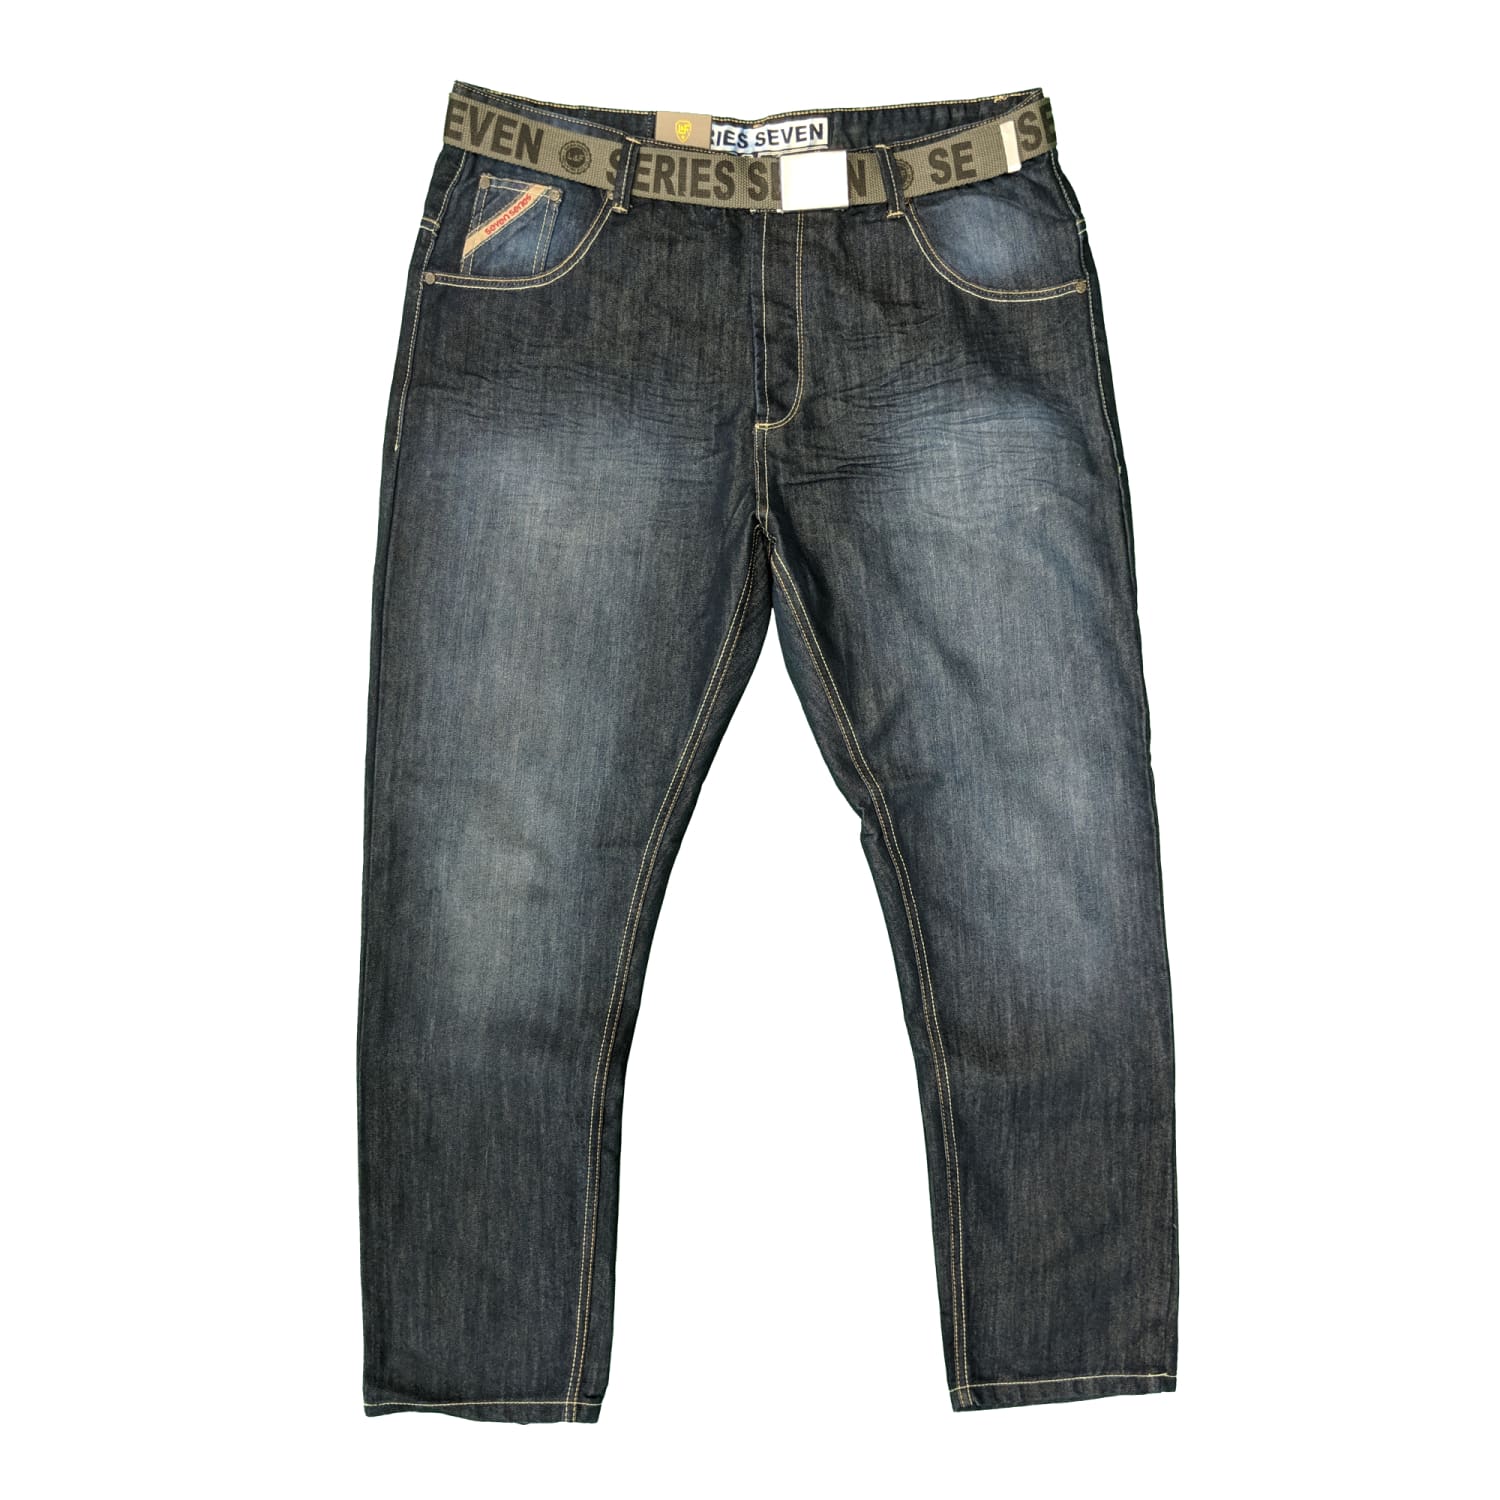 Seven Series Jeans - L603560 - Dark Wash 1